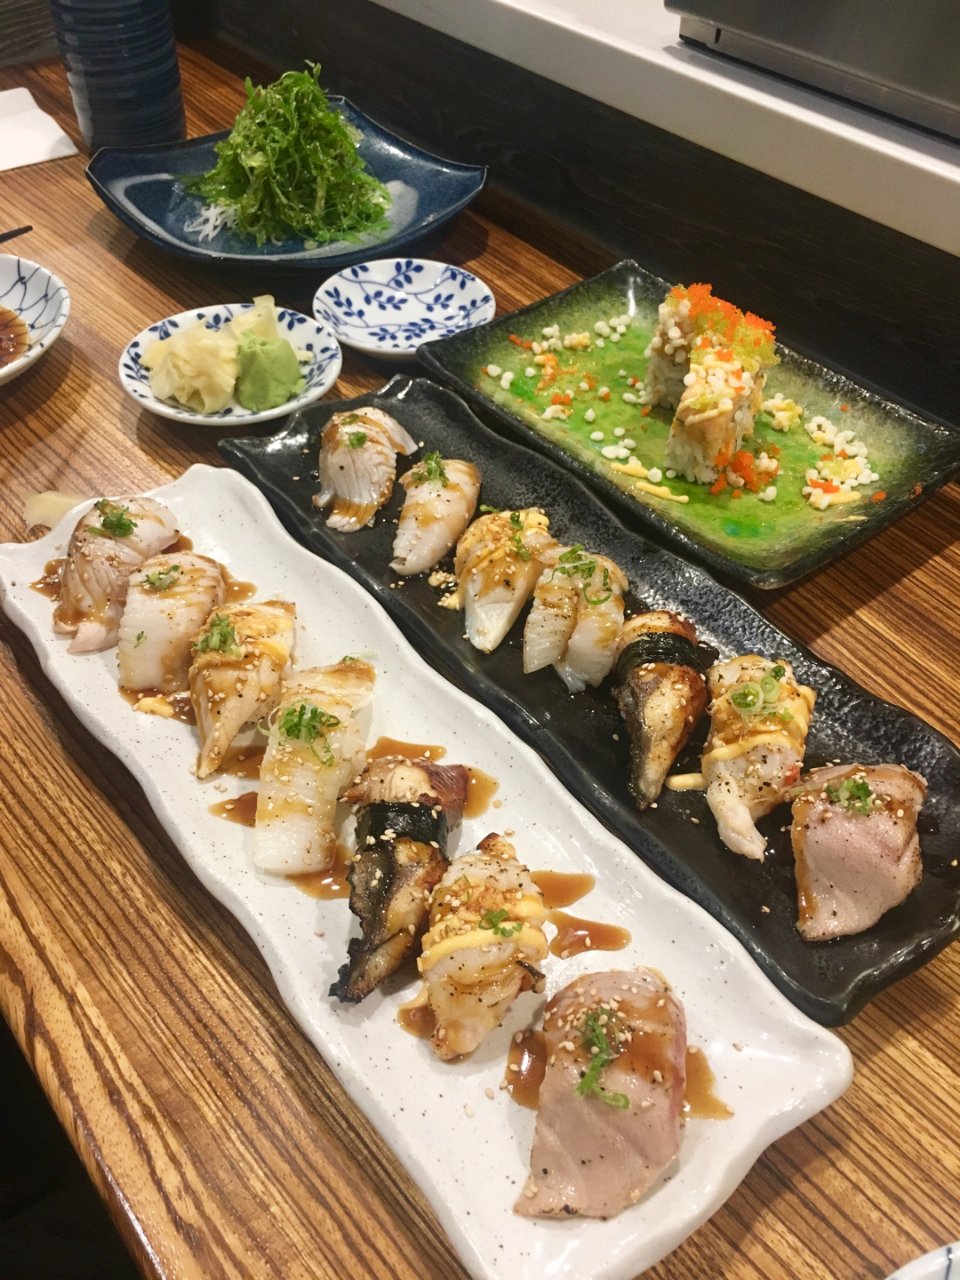 Taka’s sushi